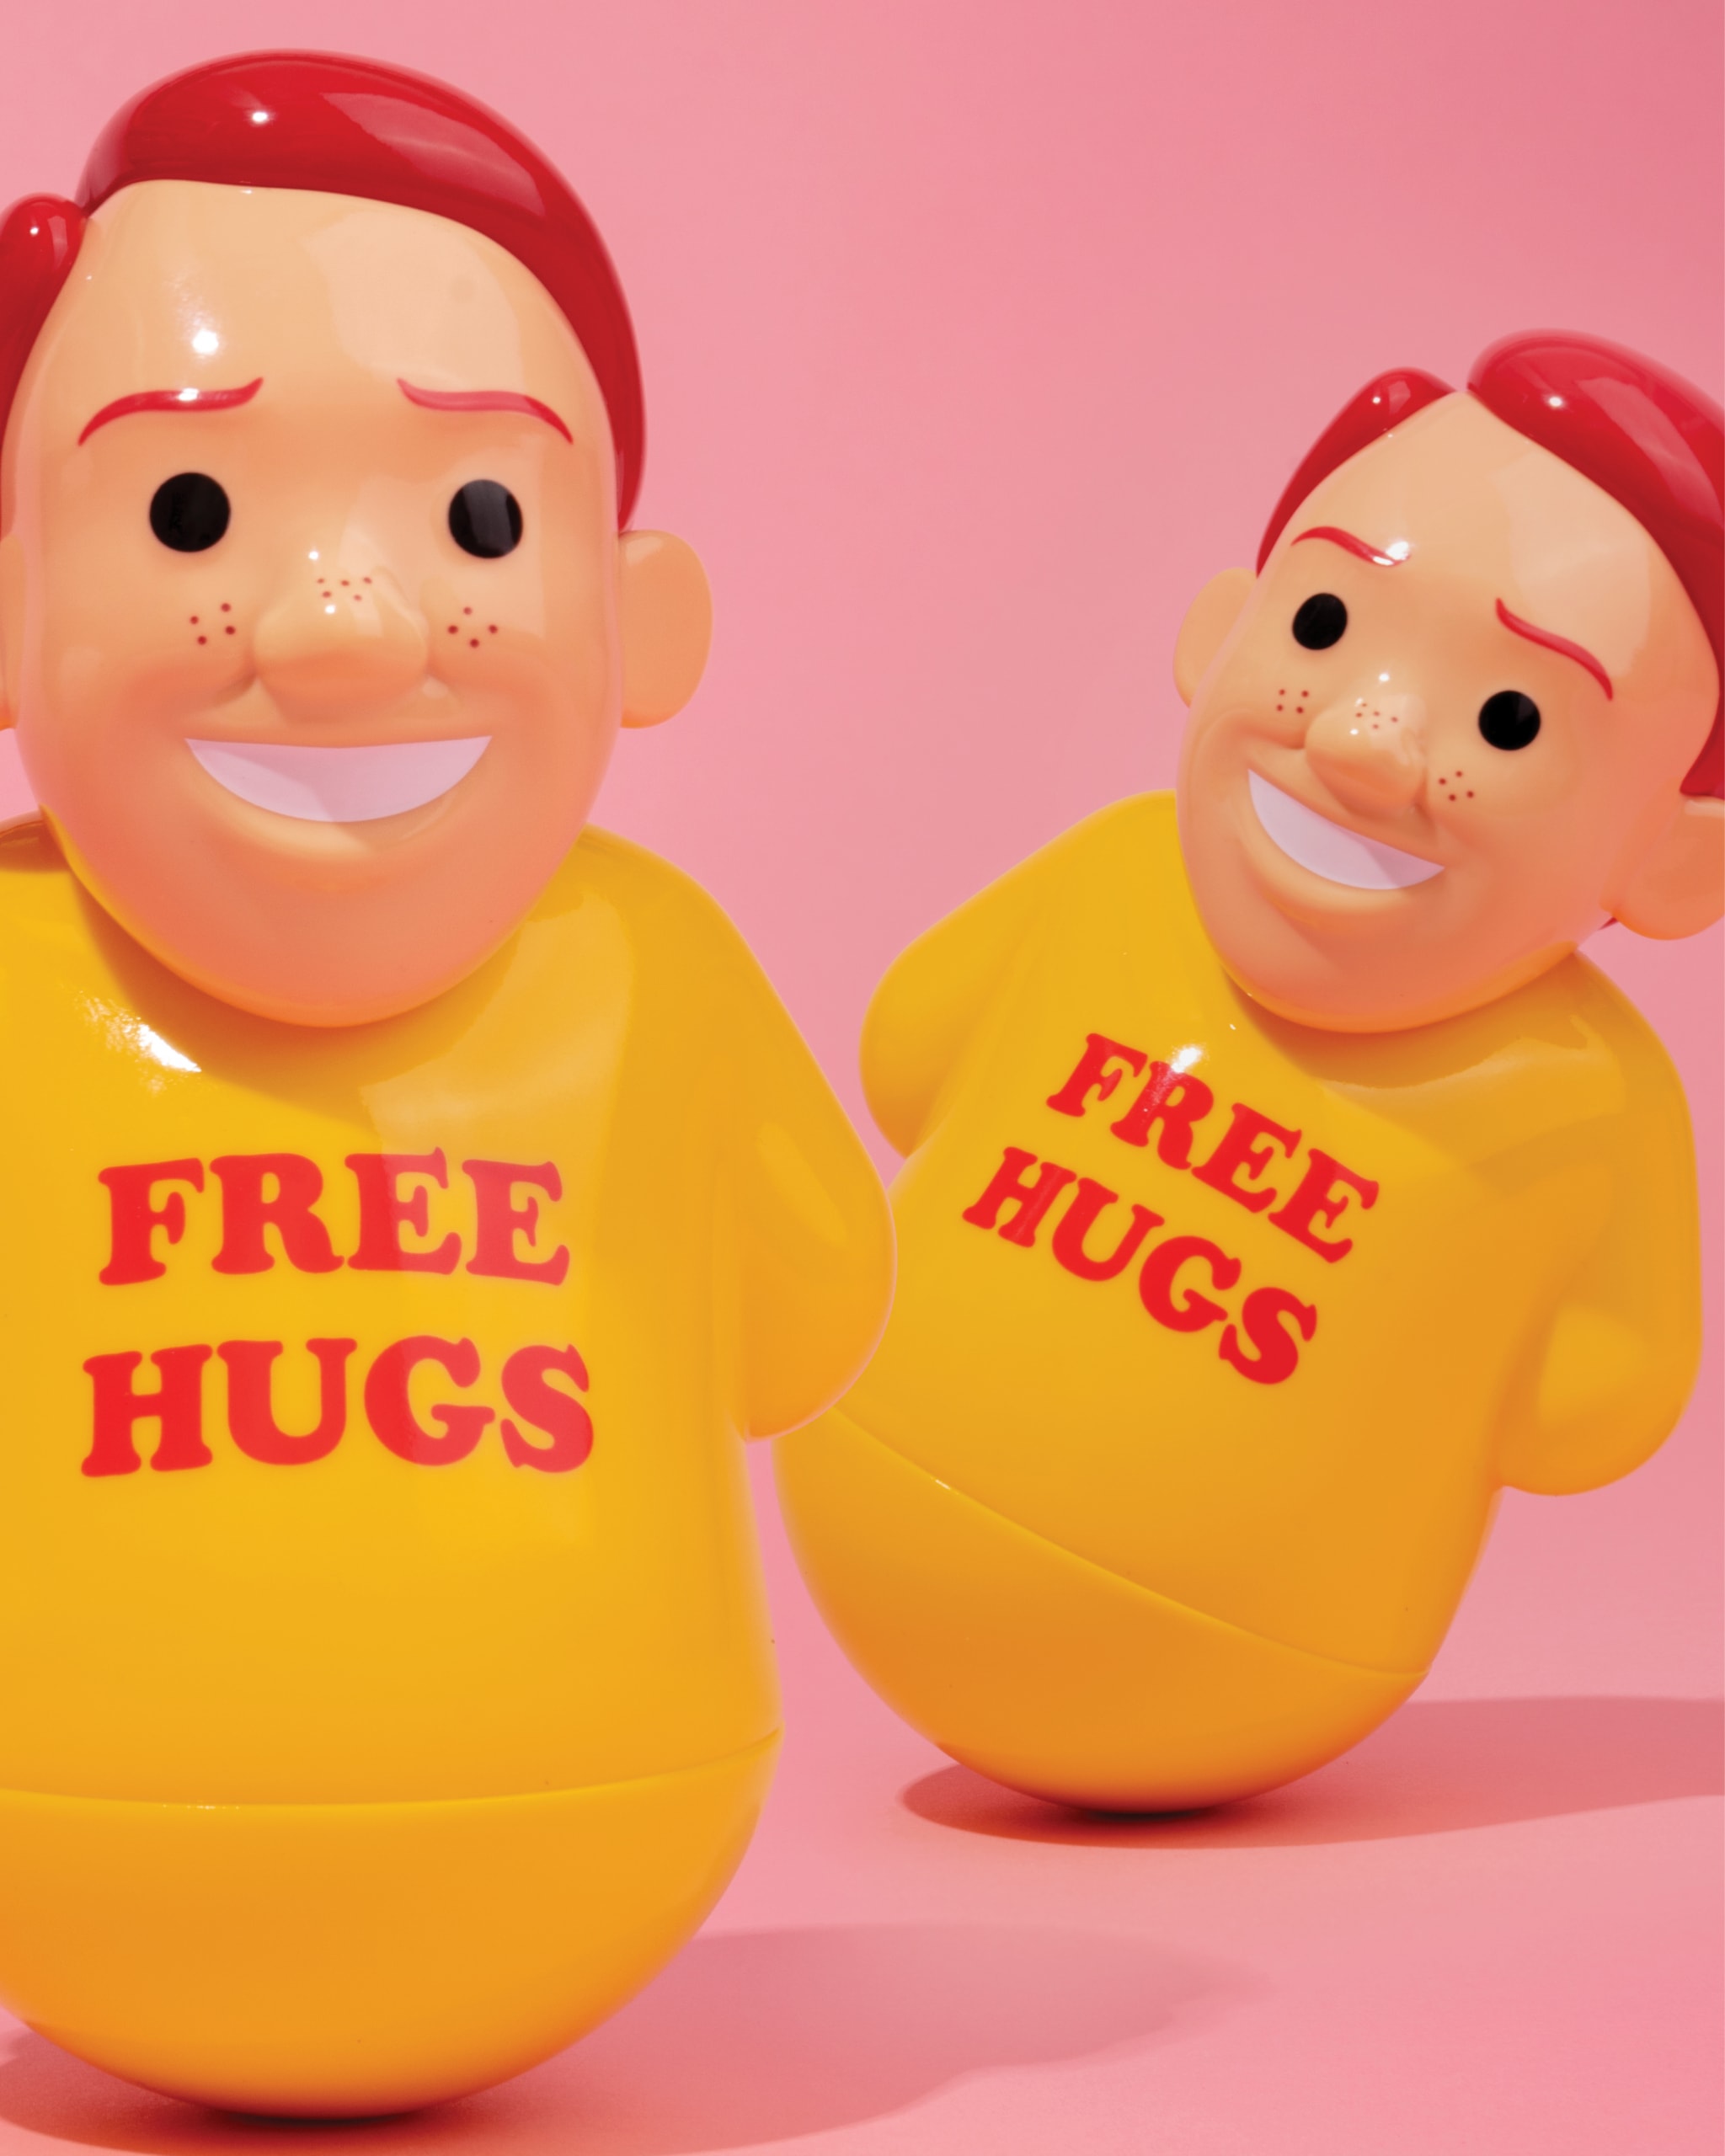 Joan Cornellà 全新《Free Hugs》搪膠公仔正式發佈